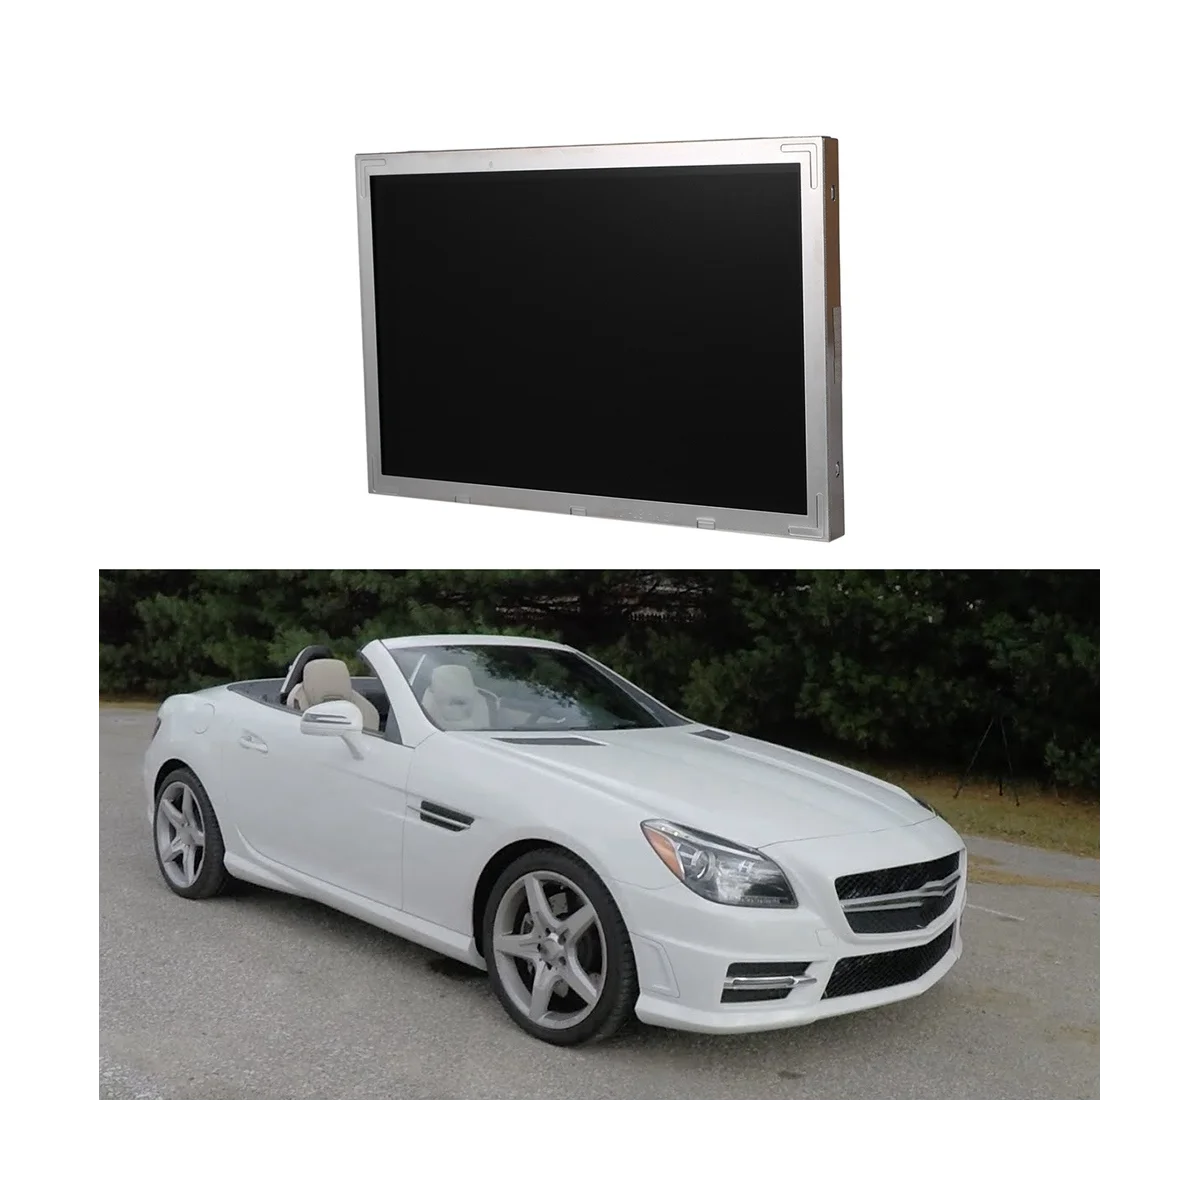 LA070WV4-SD03 SD04 LCD модул 7-инчов дисплей за Mercedes-Benz W213 SLK250 DVD GPS навигационен дисплей